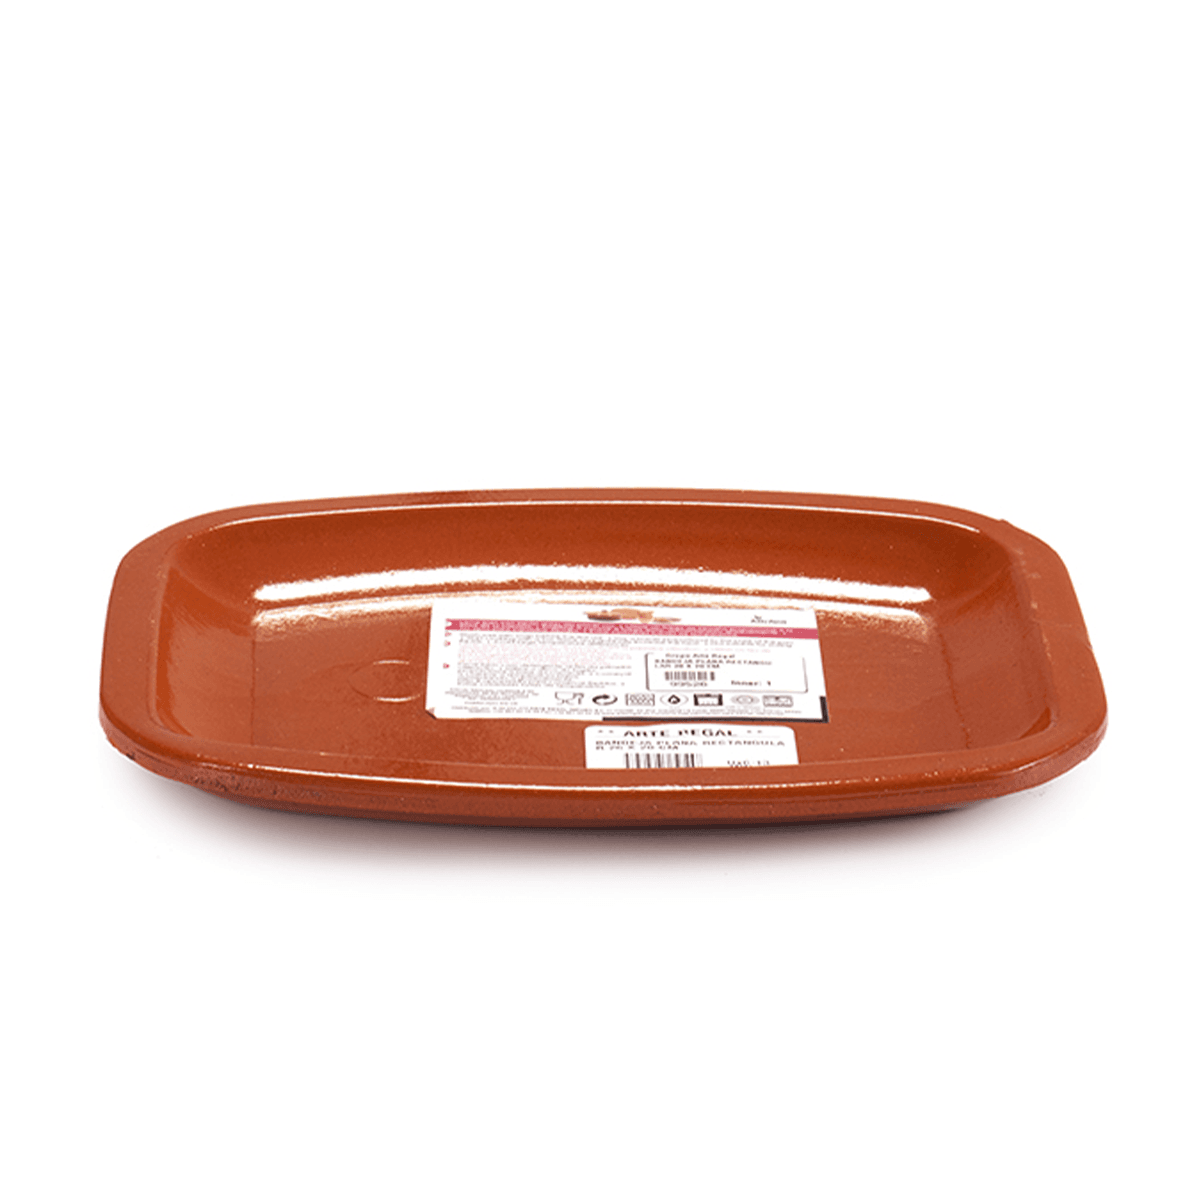 صحن مستطيل مسطح فخار 26 سم صناعة اسبانيا بني آرت ريجال Arte Regal Brown Clay Flat Rectangular Plate